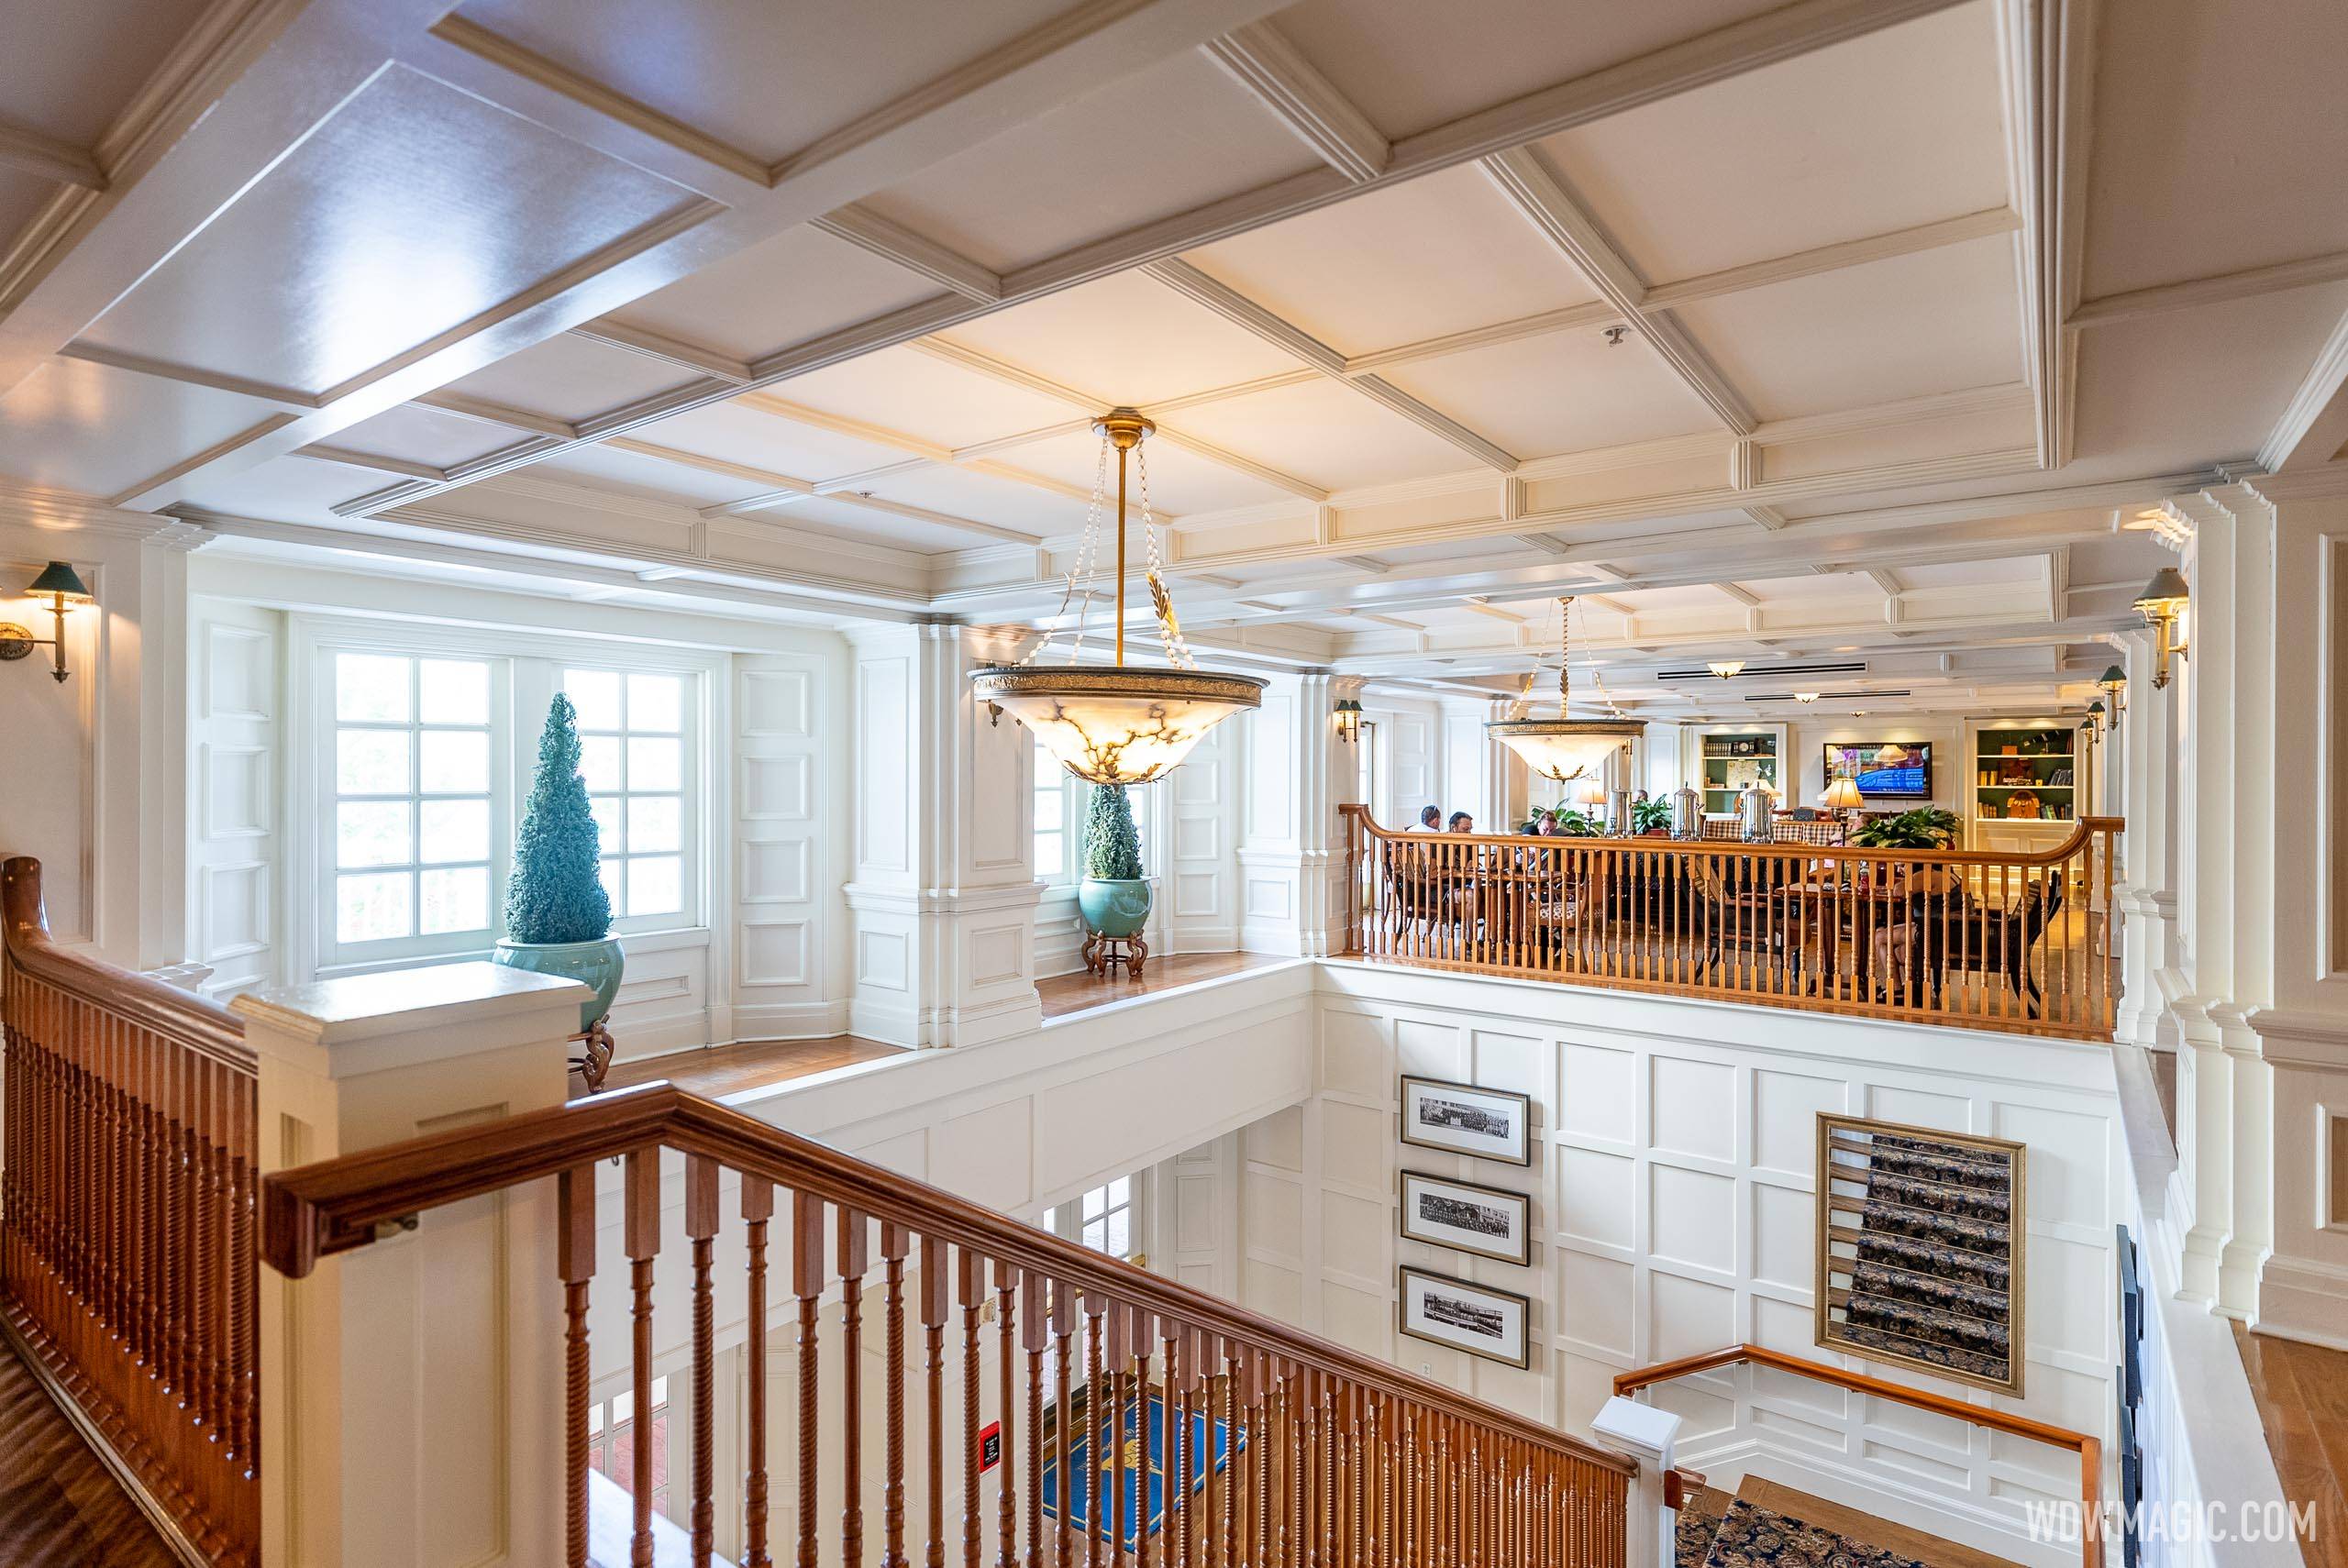 Disney's BoardWalk Inn lobby - June 2022